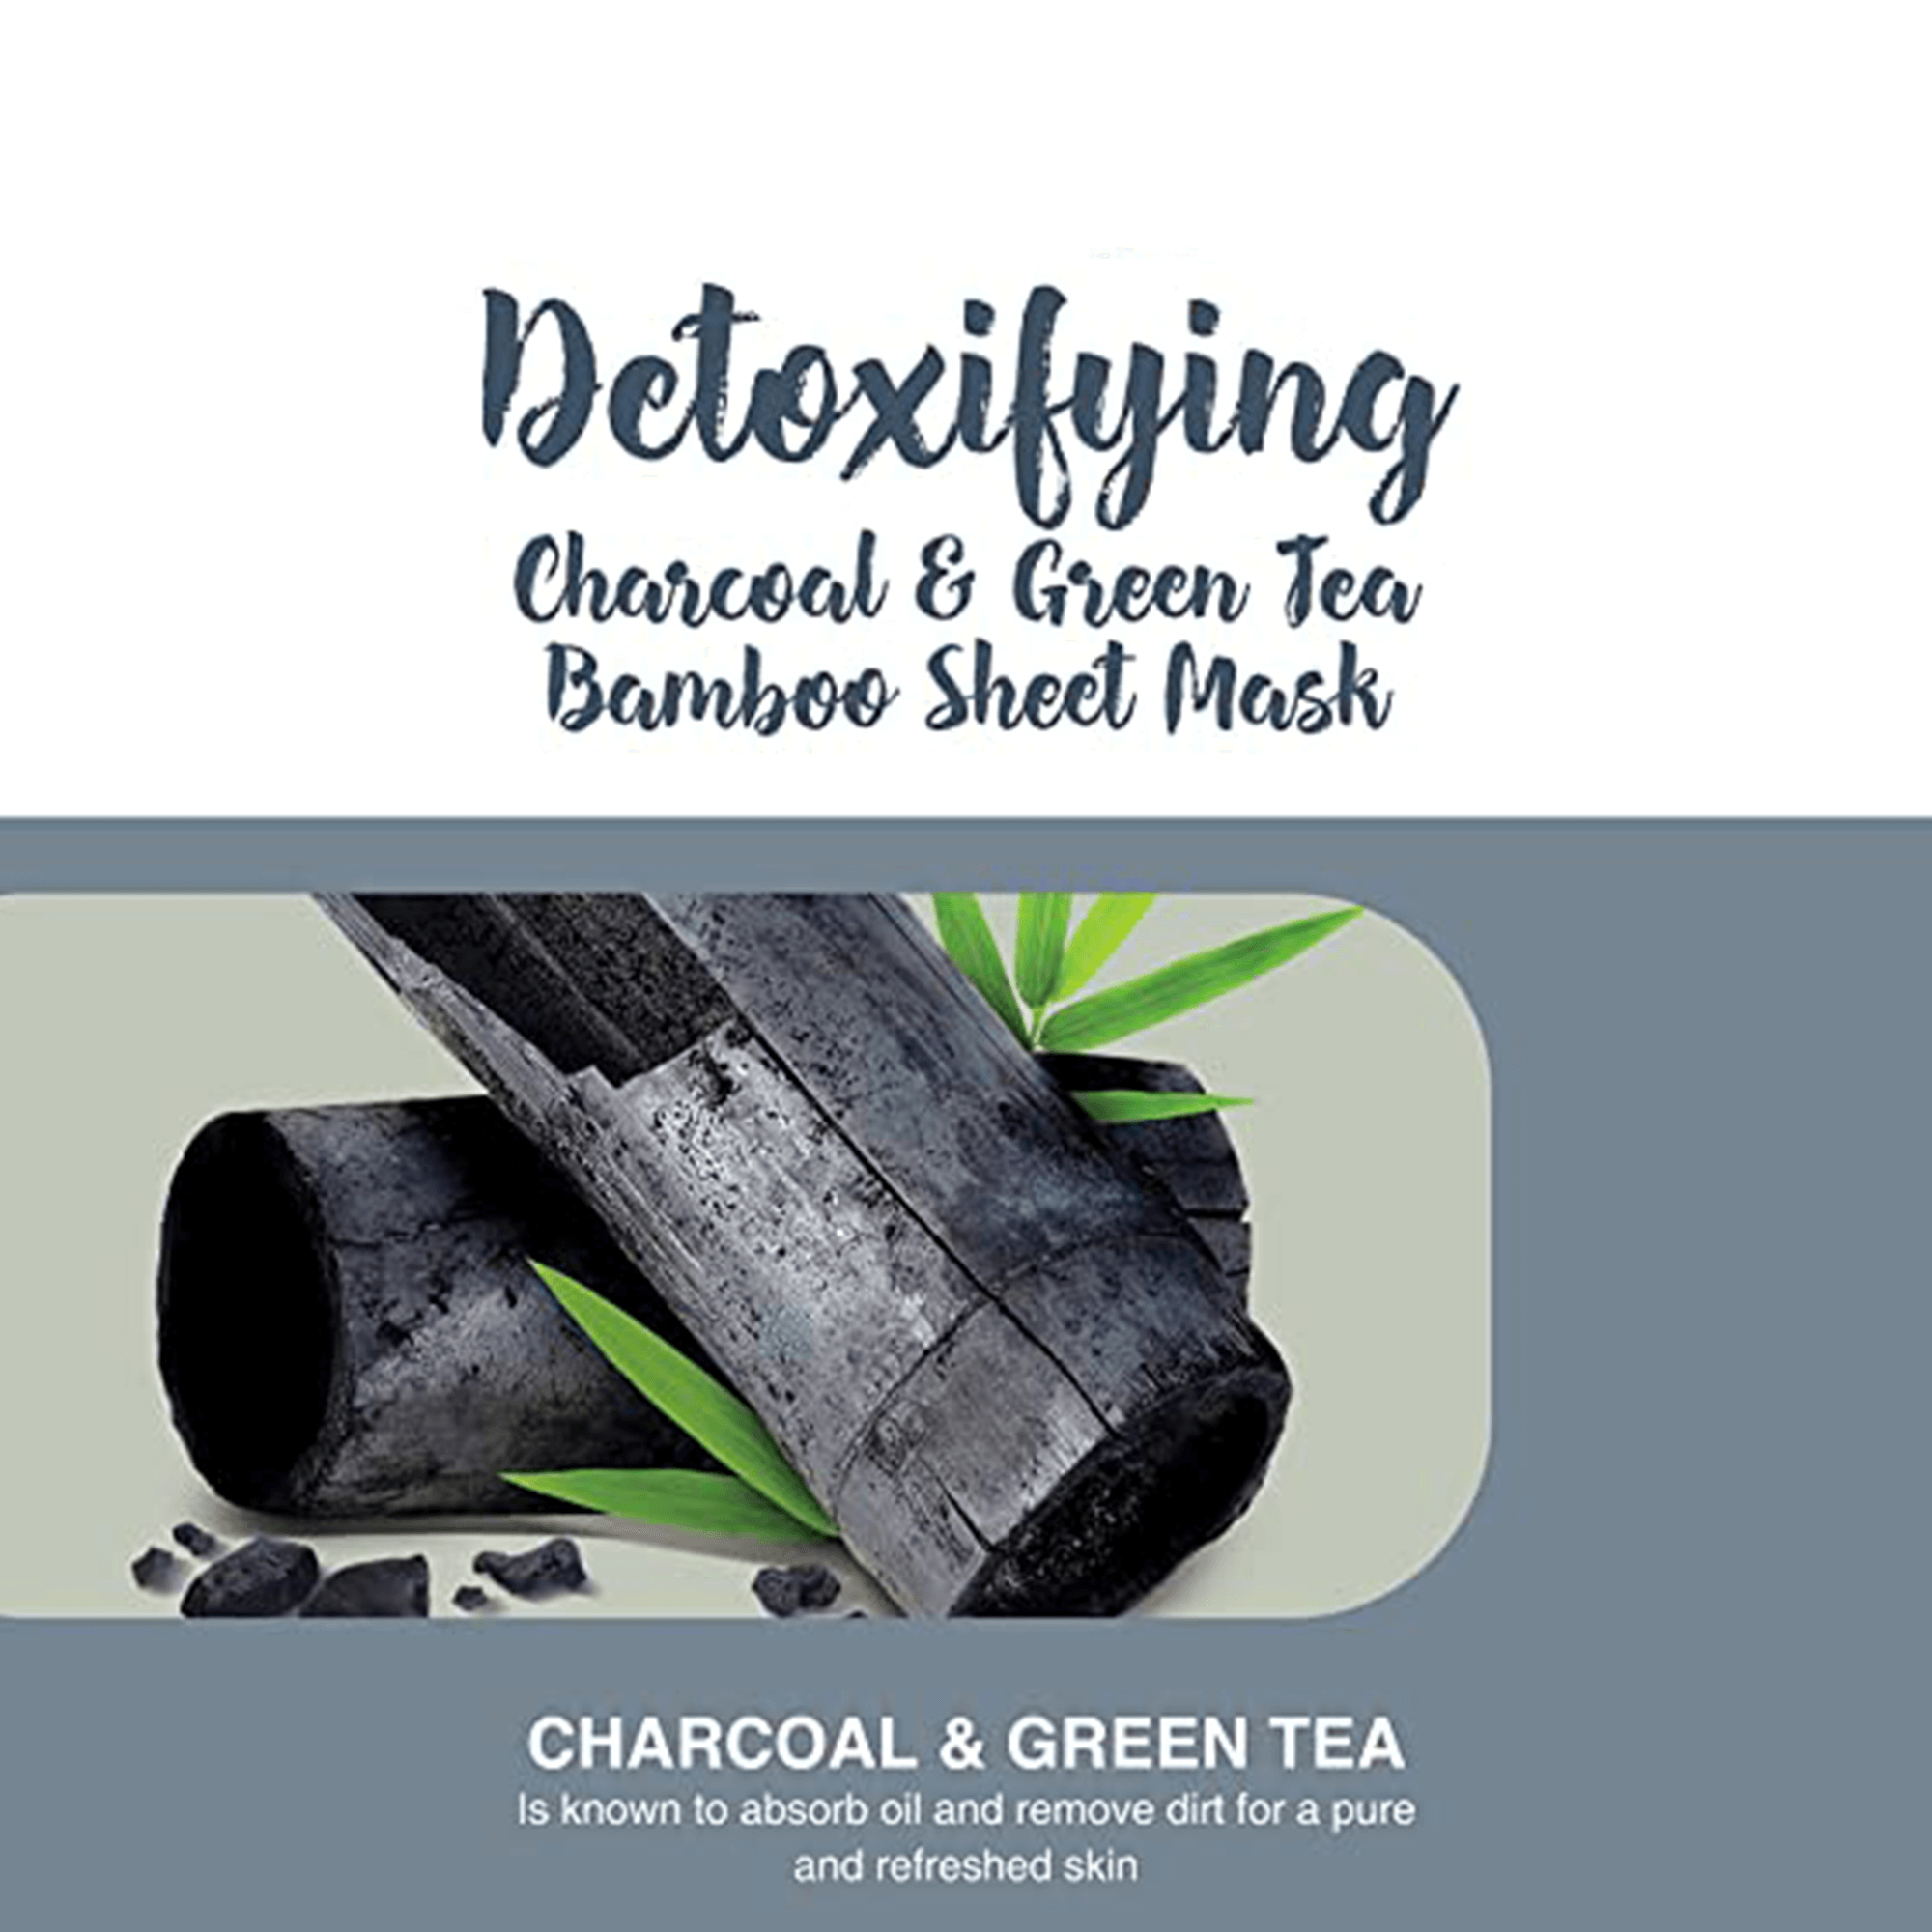 Detoxifying Charcoal & Green Tea Bamboo Sheet Mask Key Ingredients